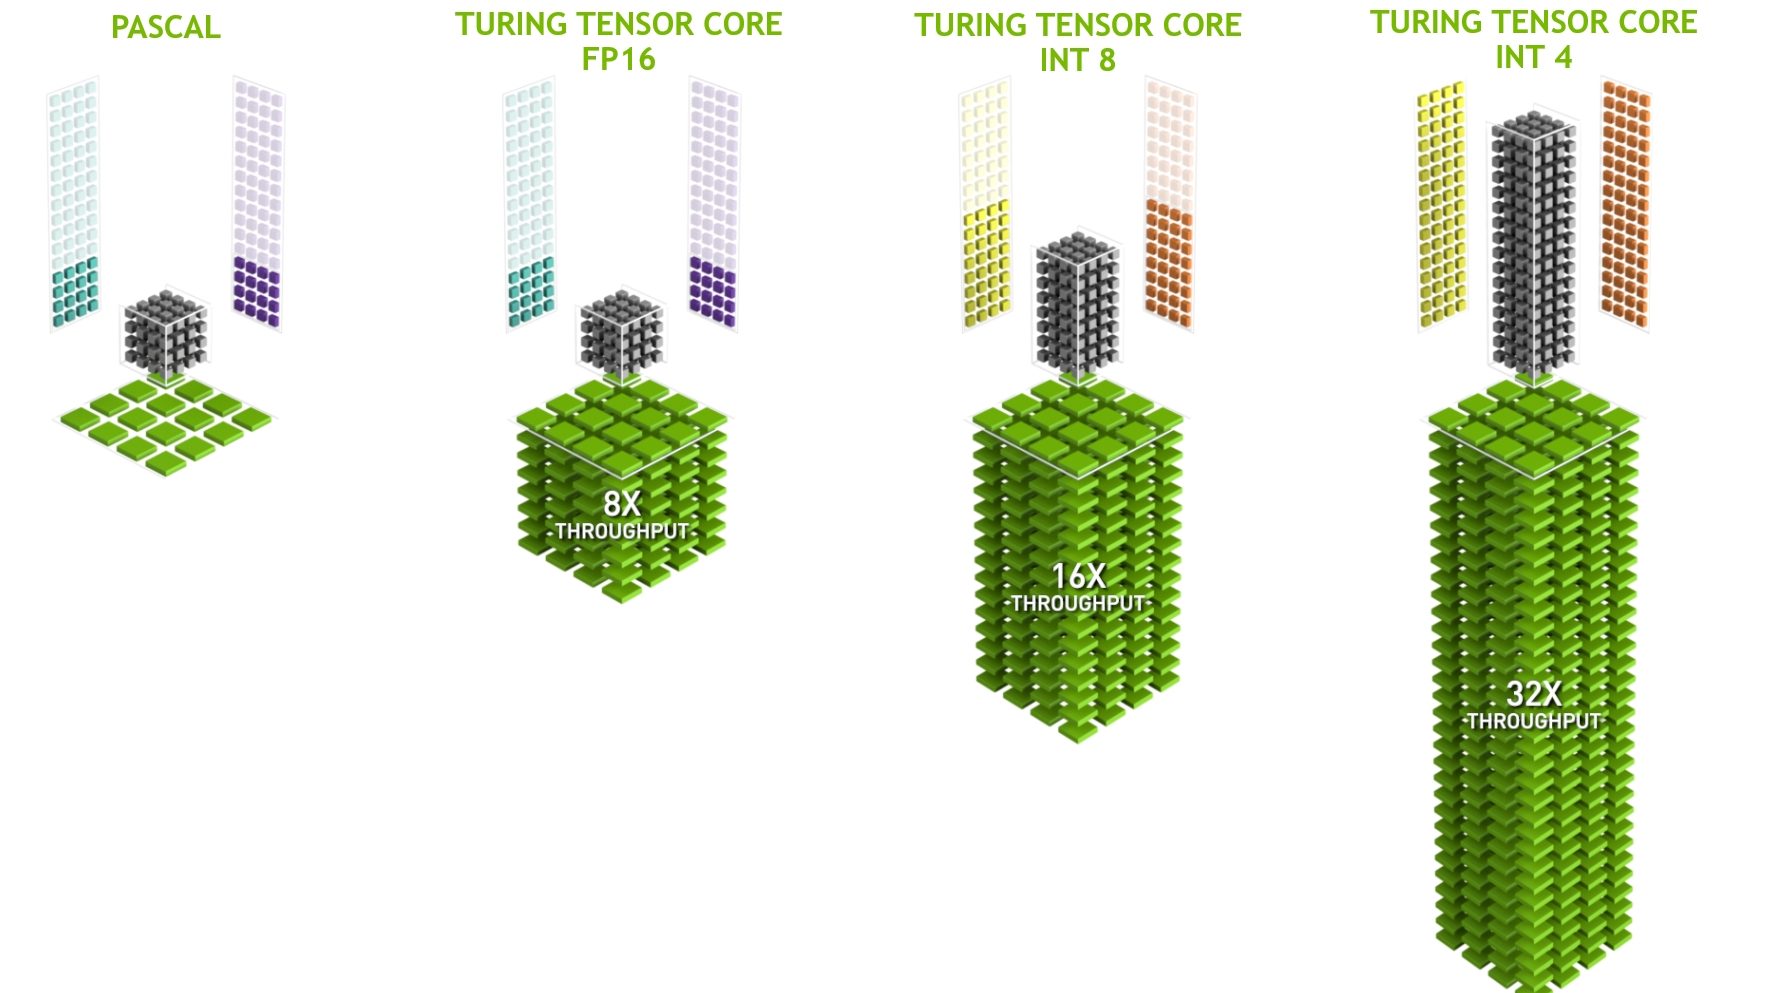 NVIDIA Turing Tensor Core